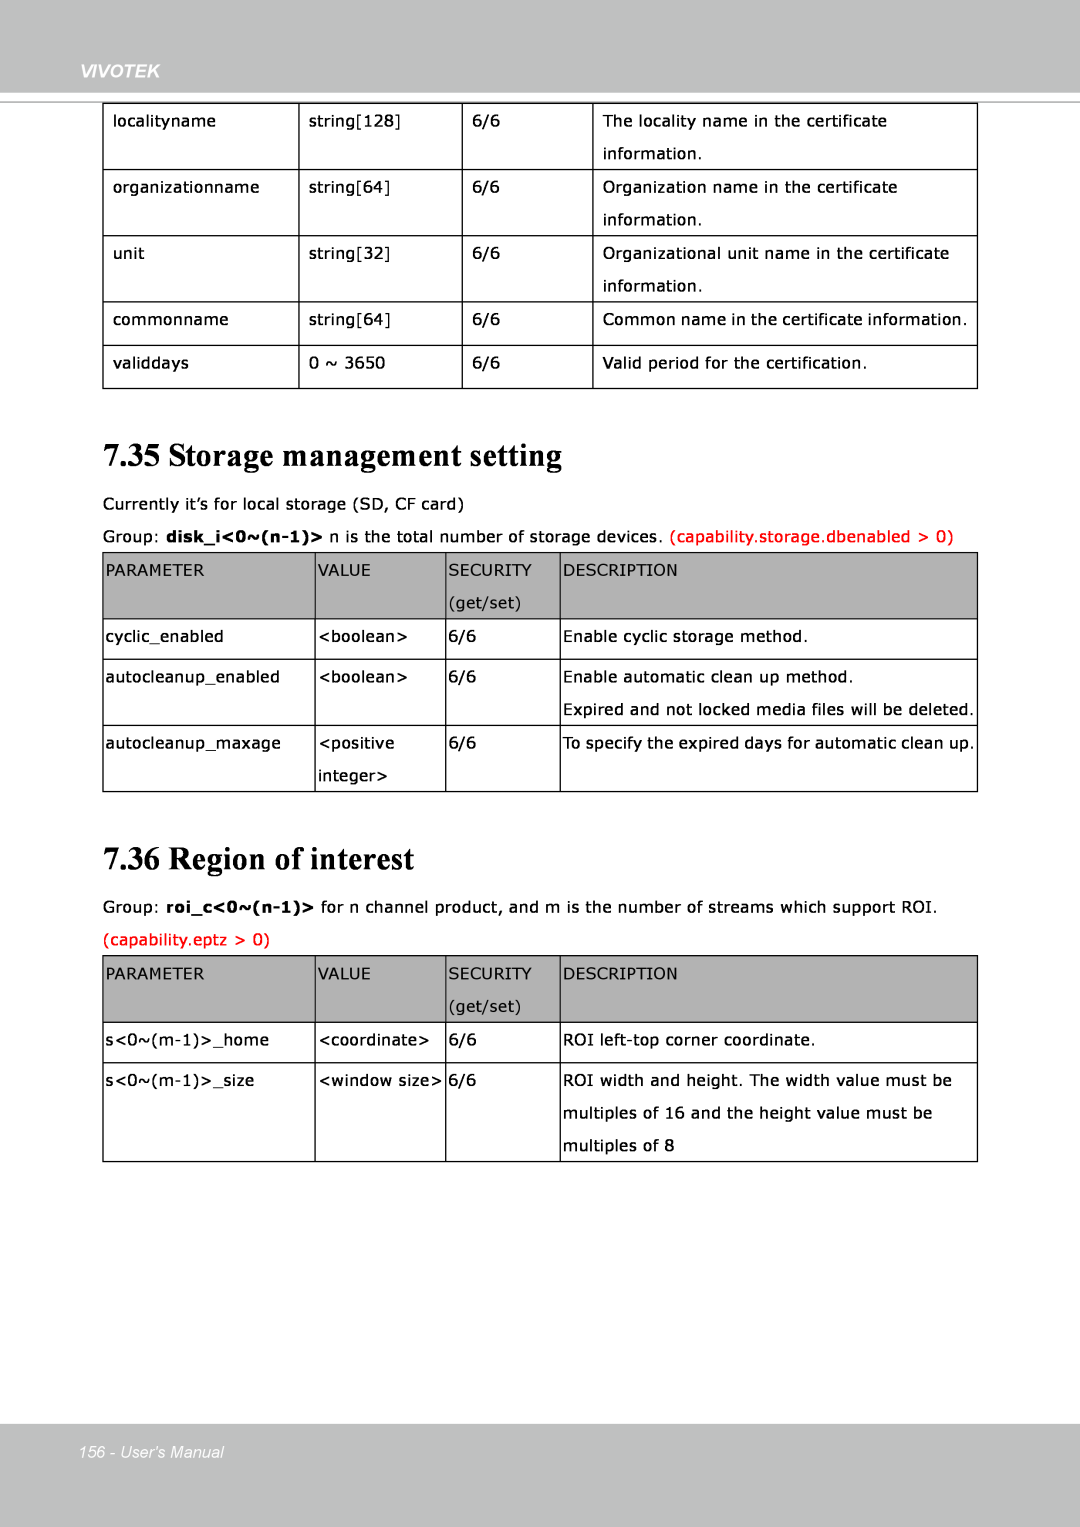 Vivotek IP8352 manual Storage management setting, Region of interest, Vivotek, Users Manual 